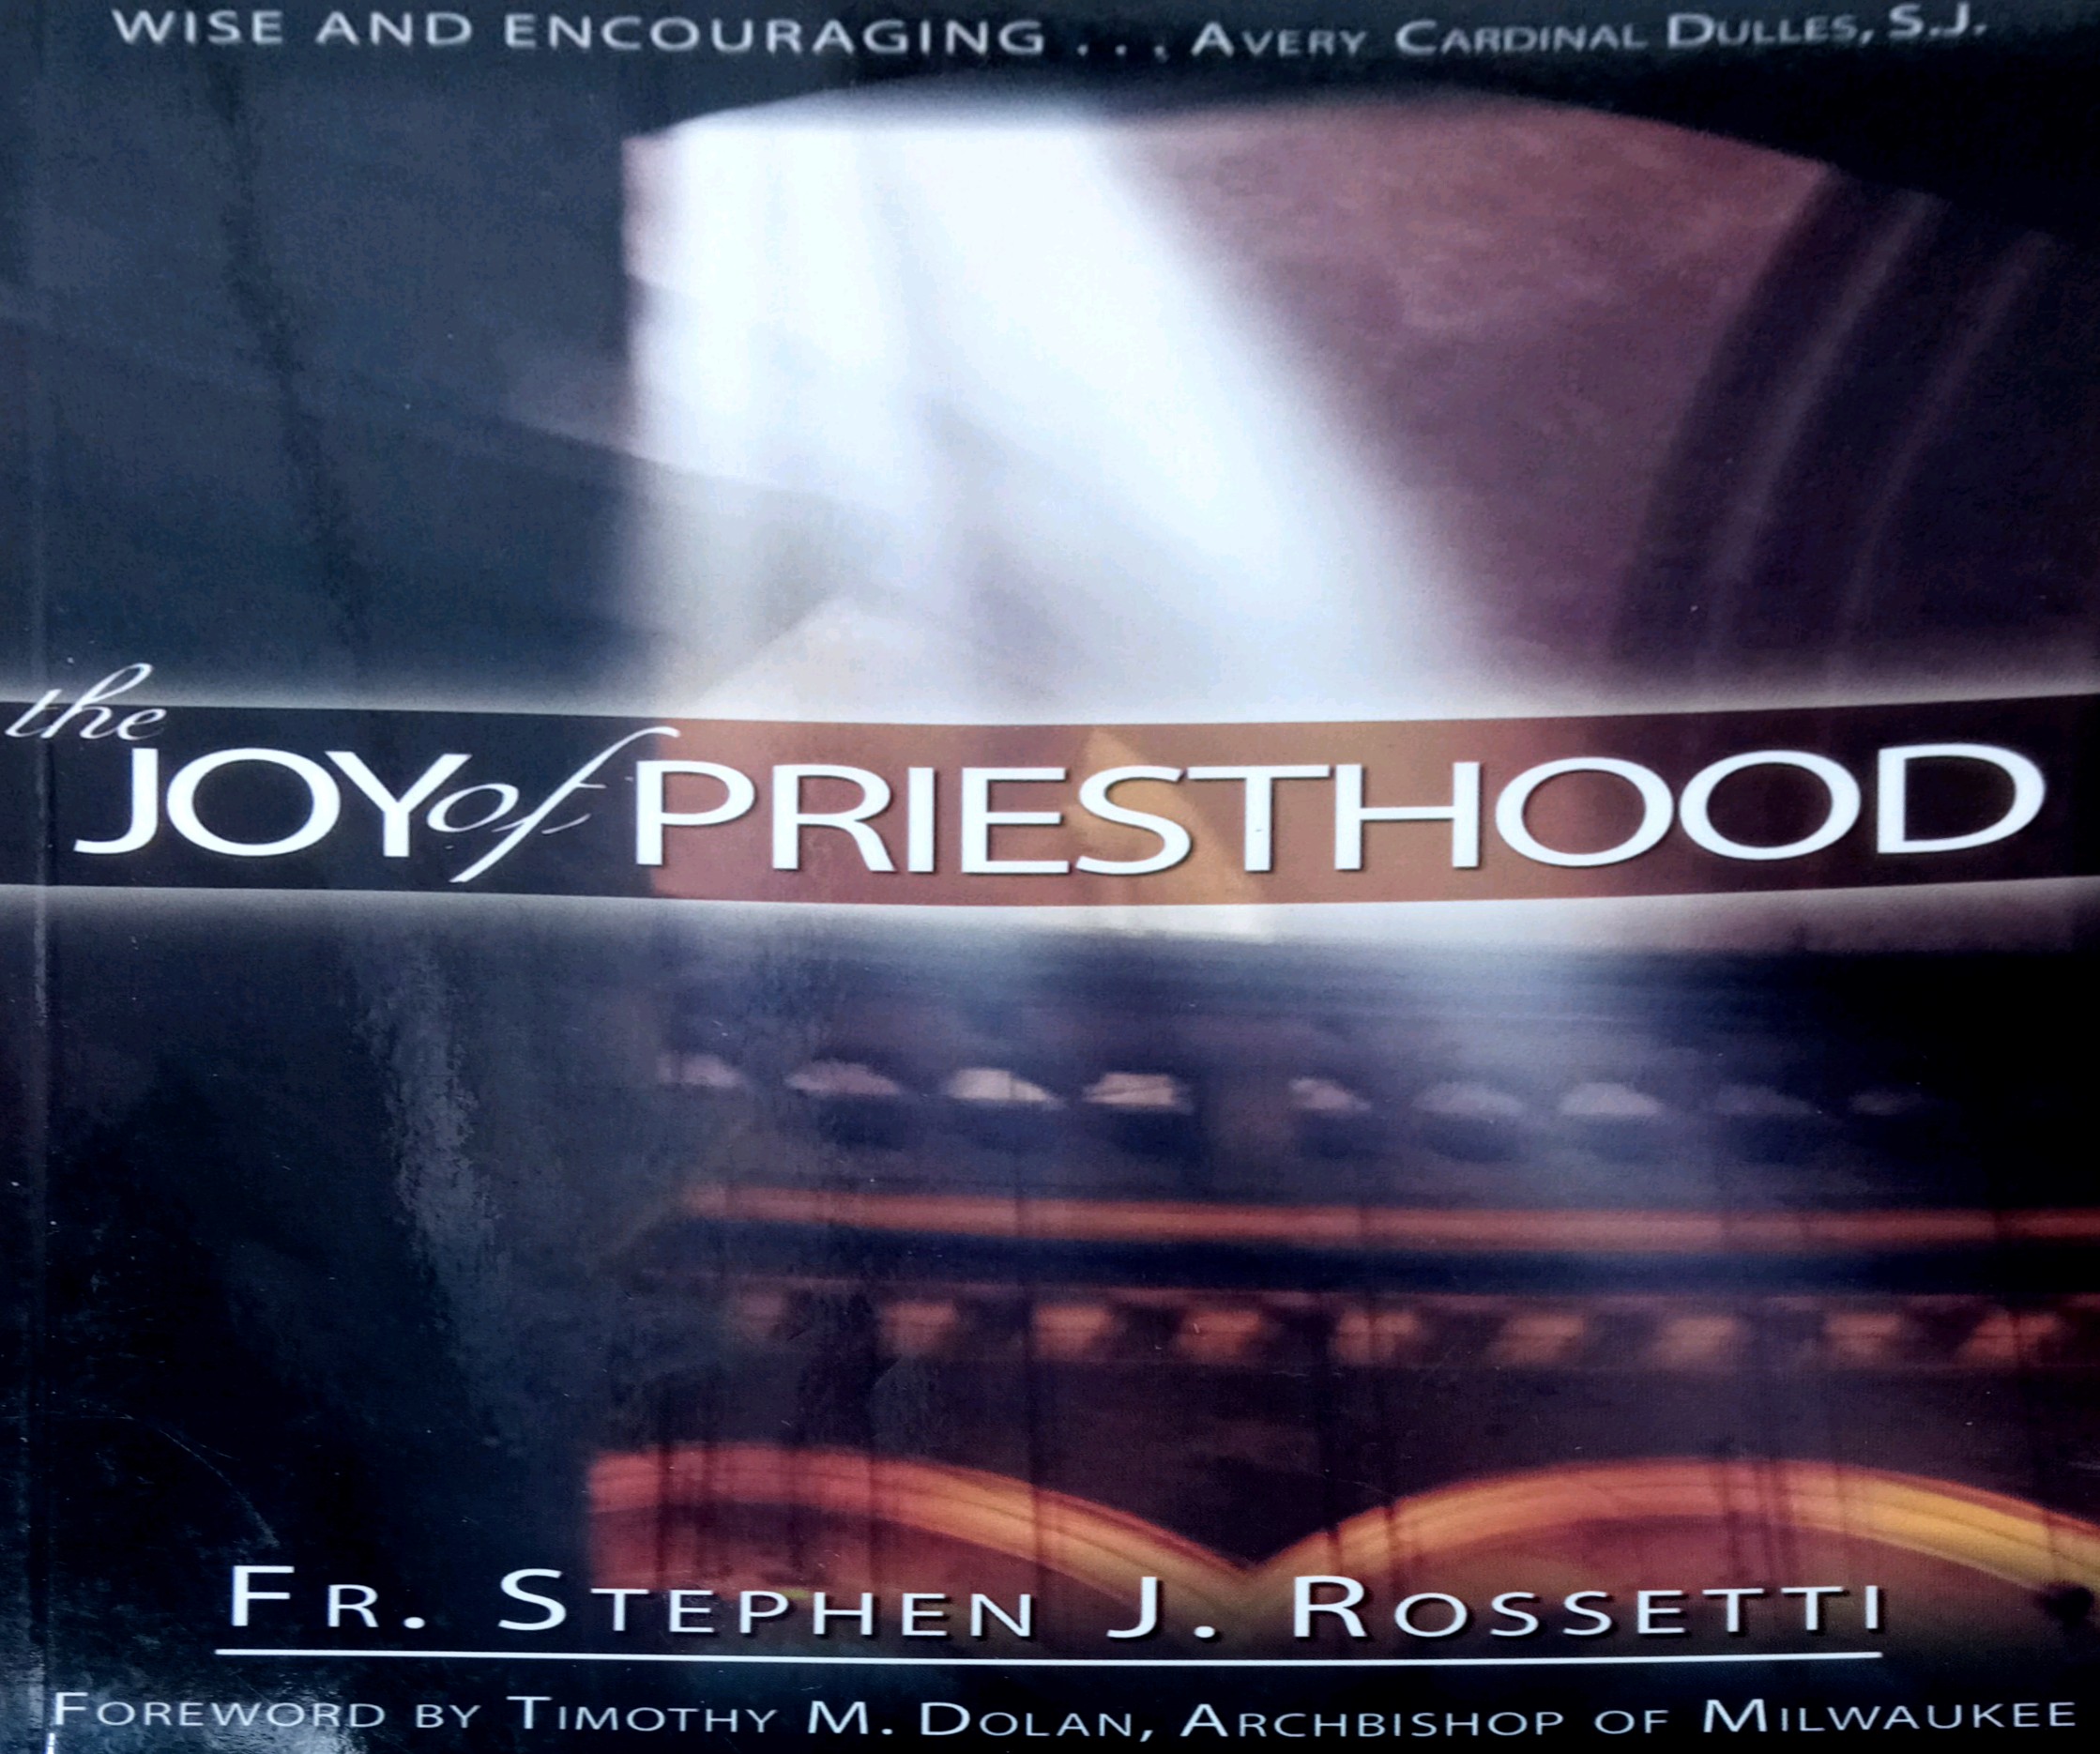 THE JOY OF PRIESTHOOD